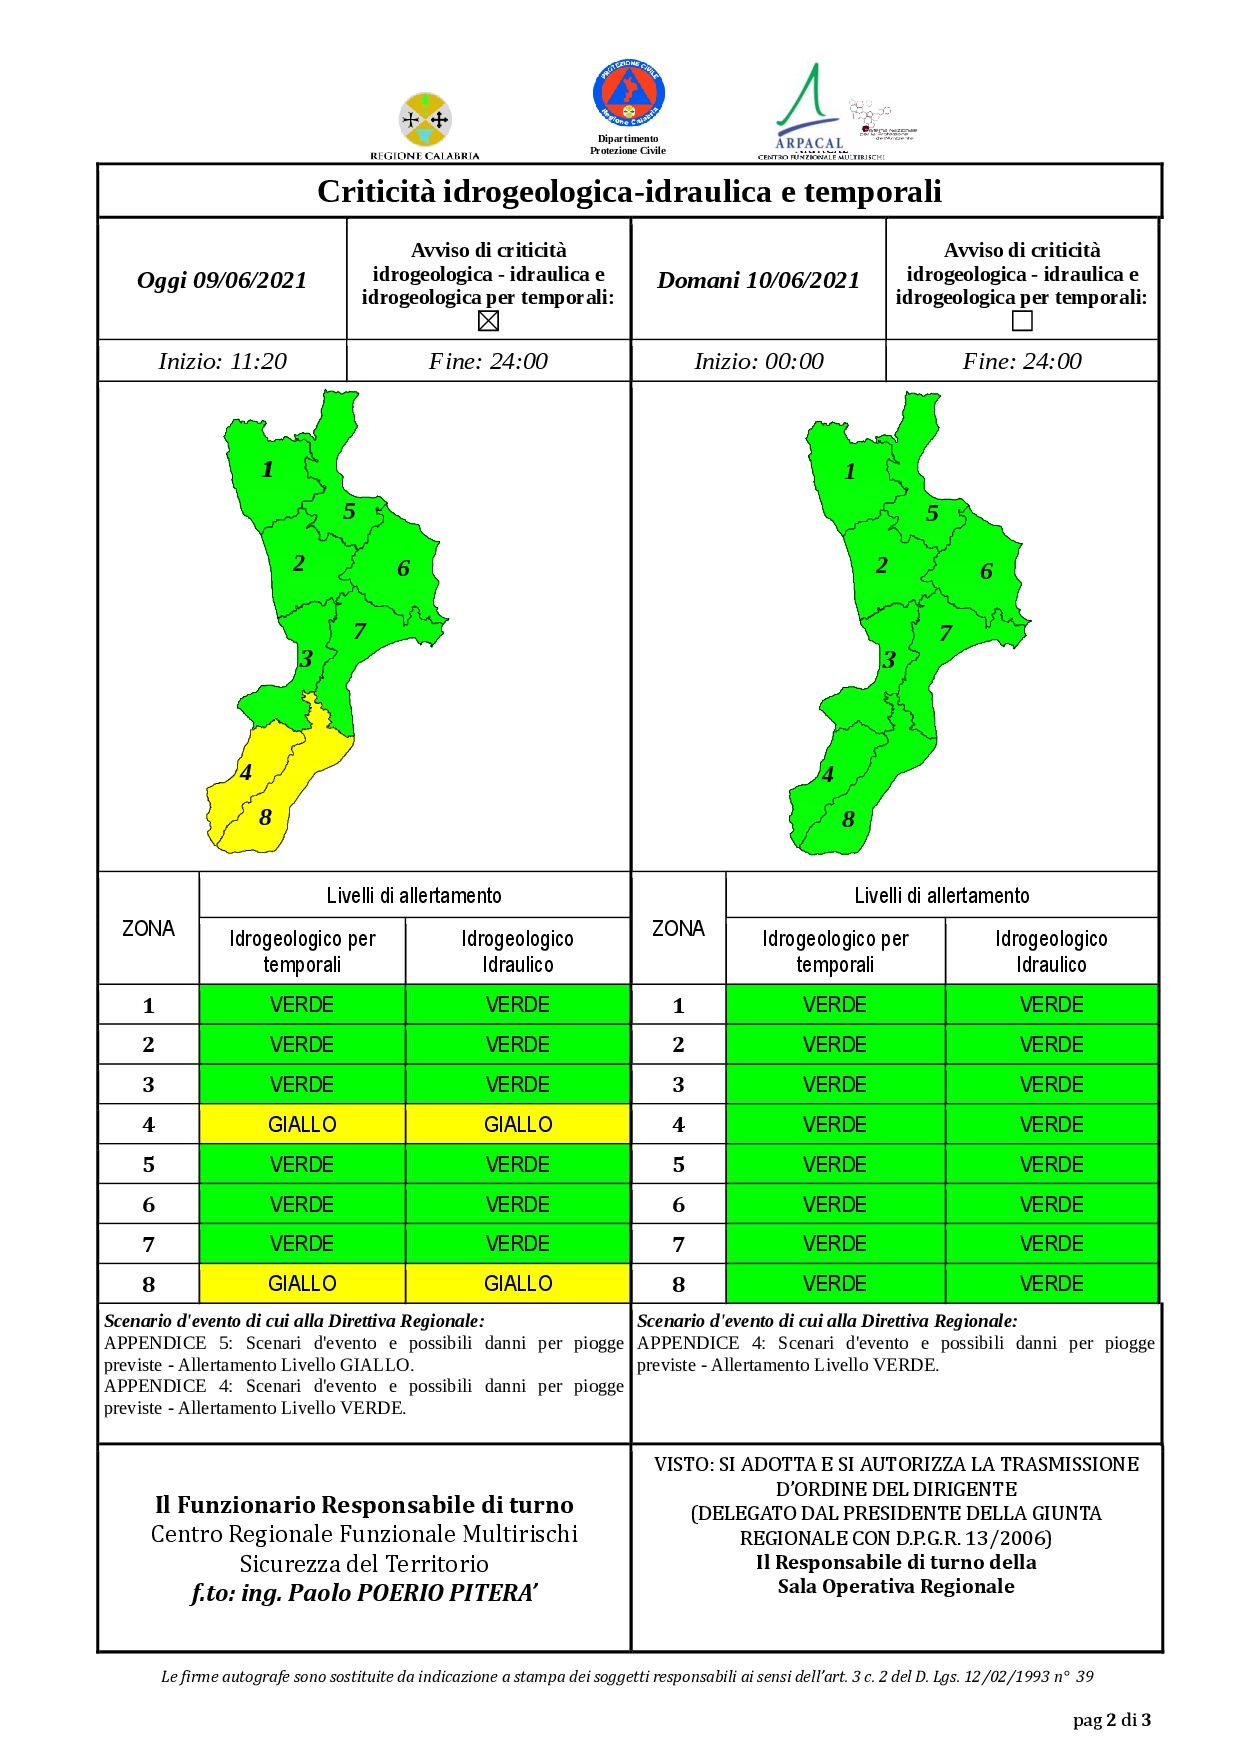 Criticità idrogeologica-idraulica e temporali in Calabria 09-06-2021